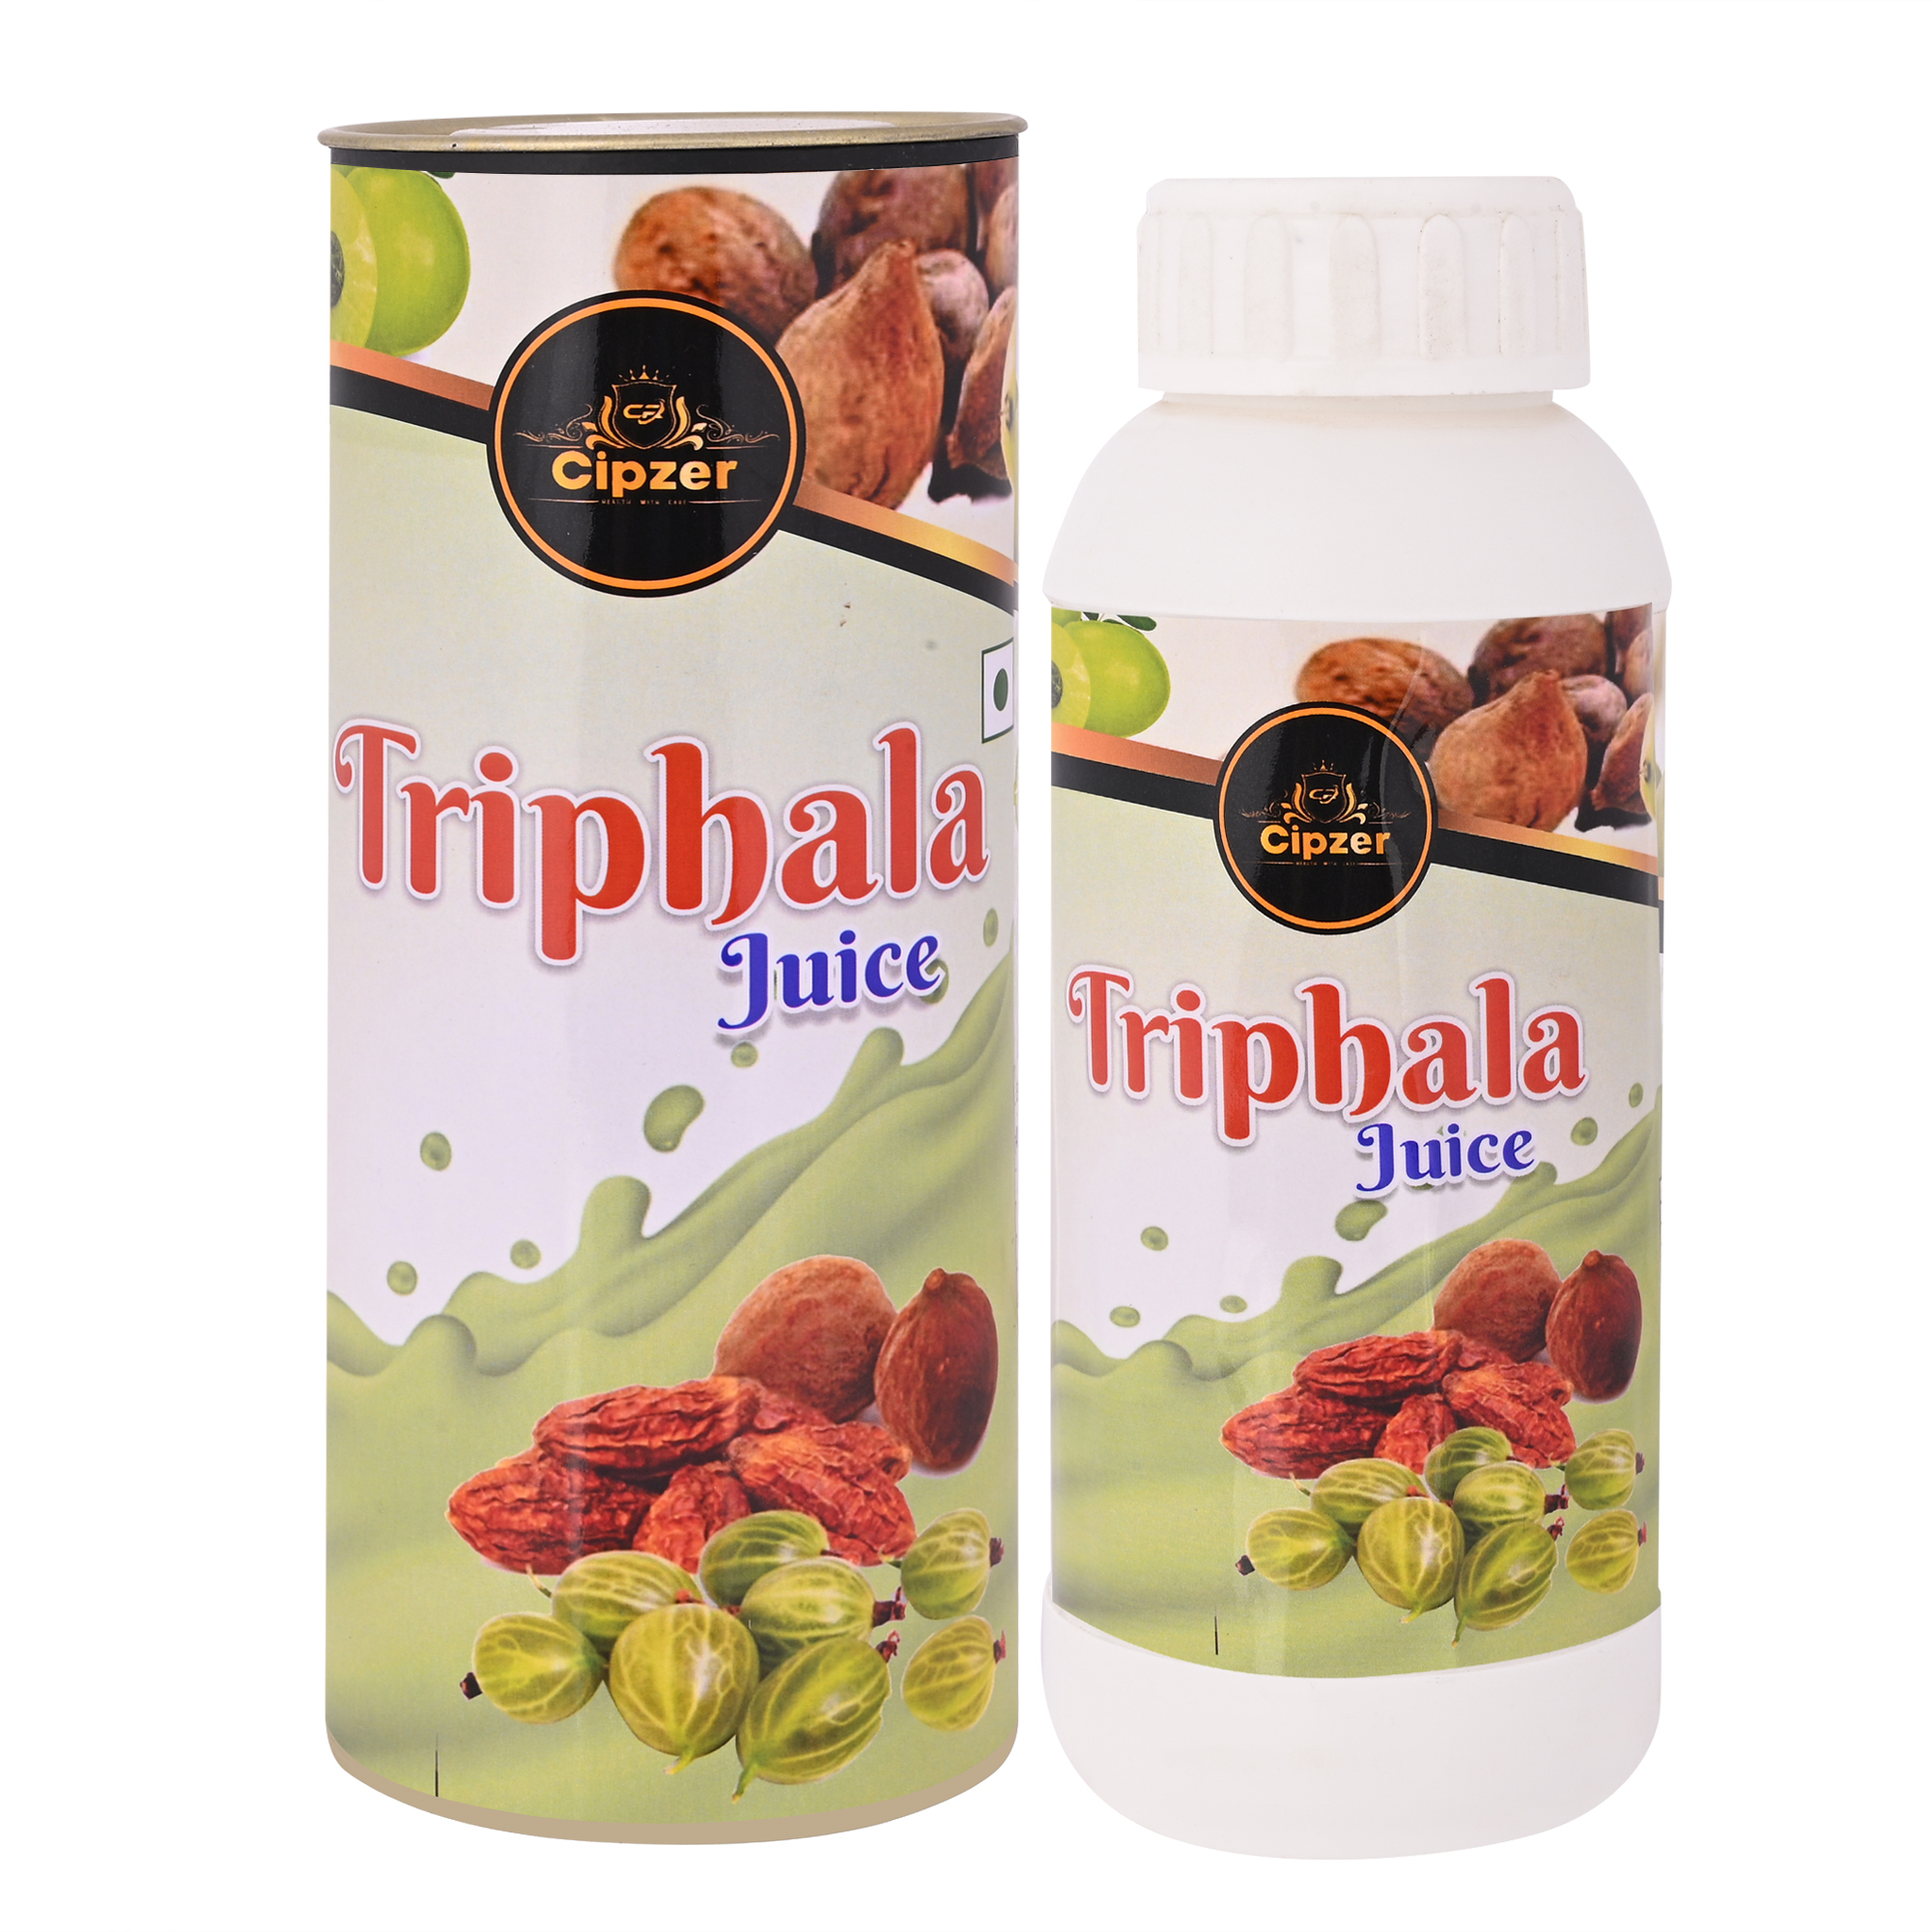 Buy Cipzer Triphala Juice at Best Price Online